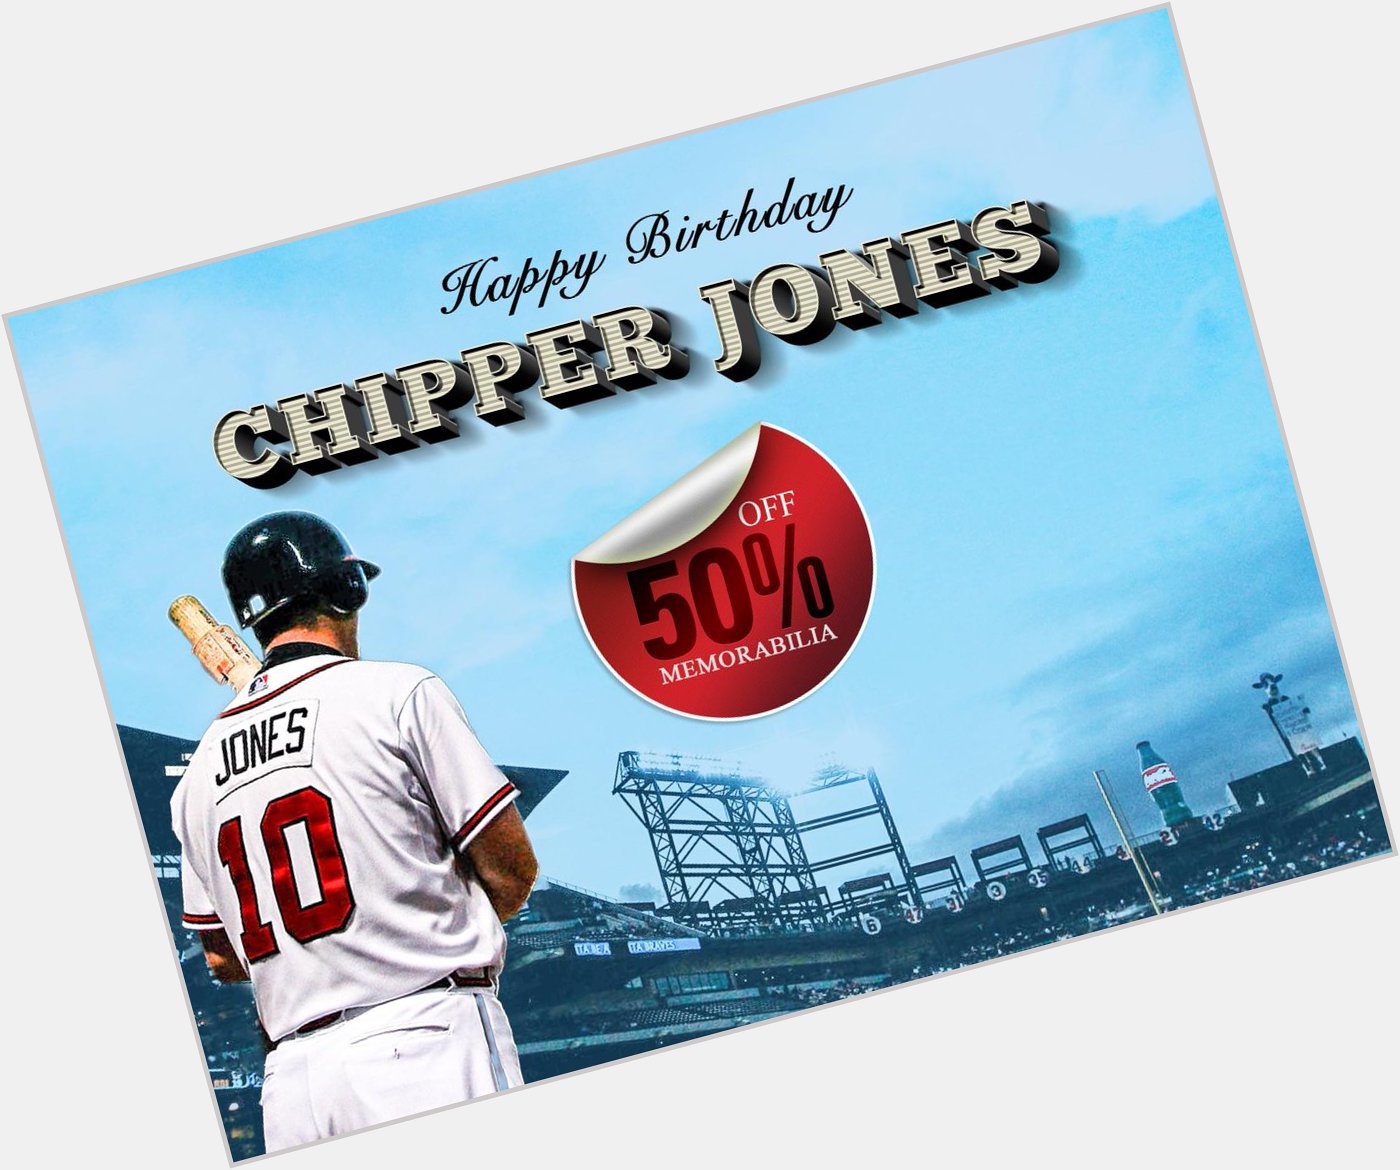 Happy Birthday to Chipper Jones! Take 50% off all Chipper Jones Memorabilia! 